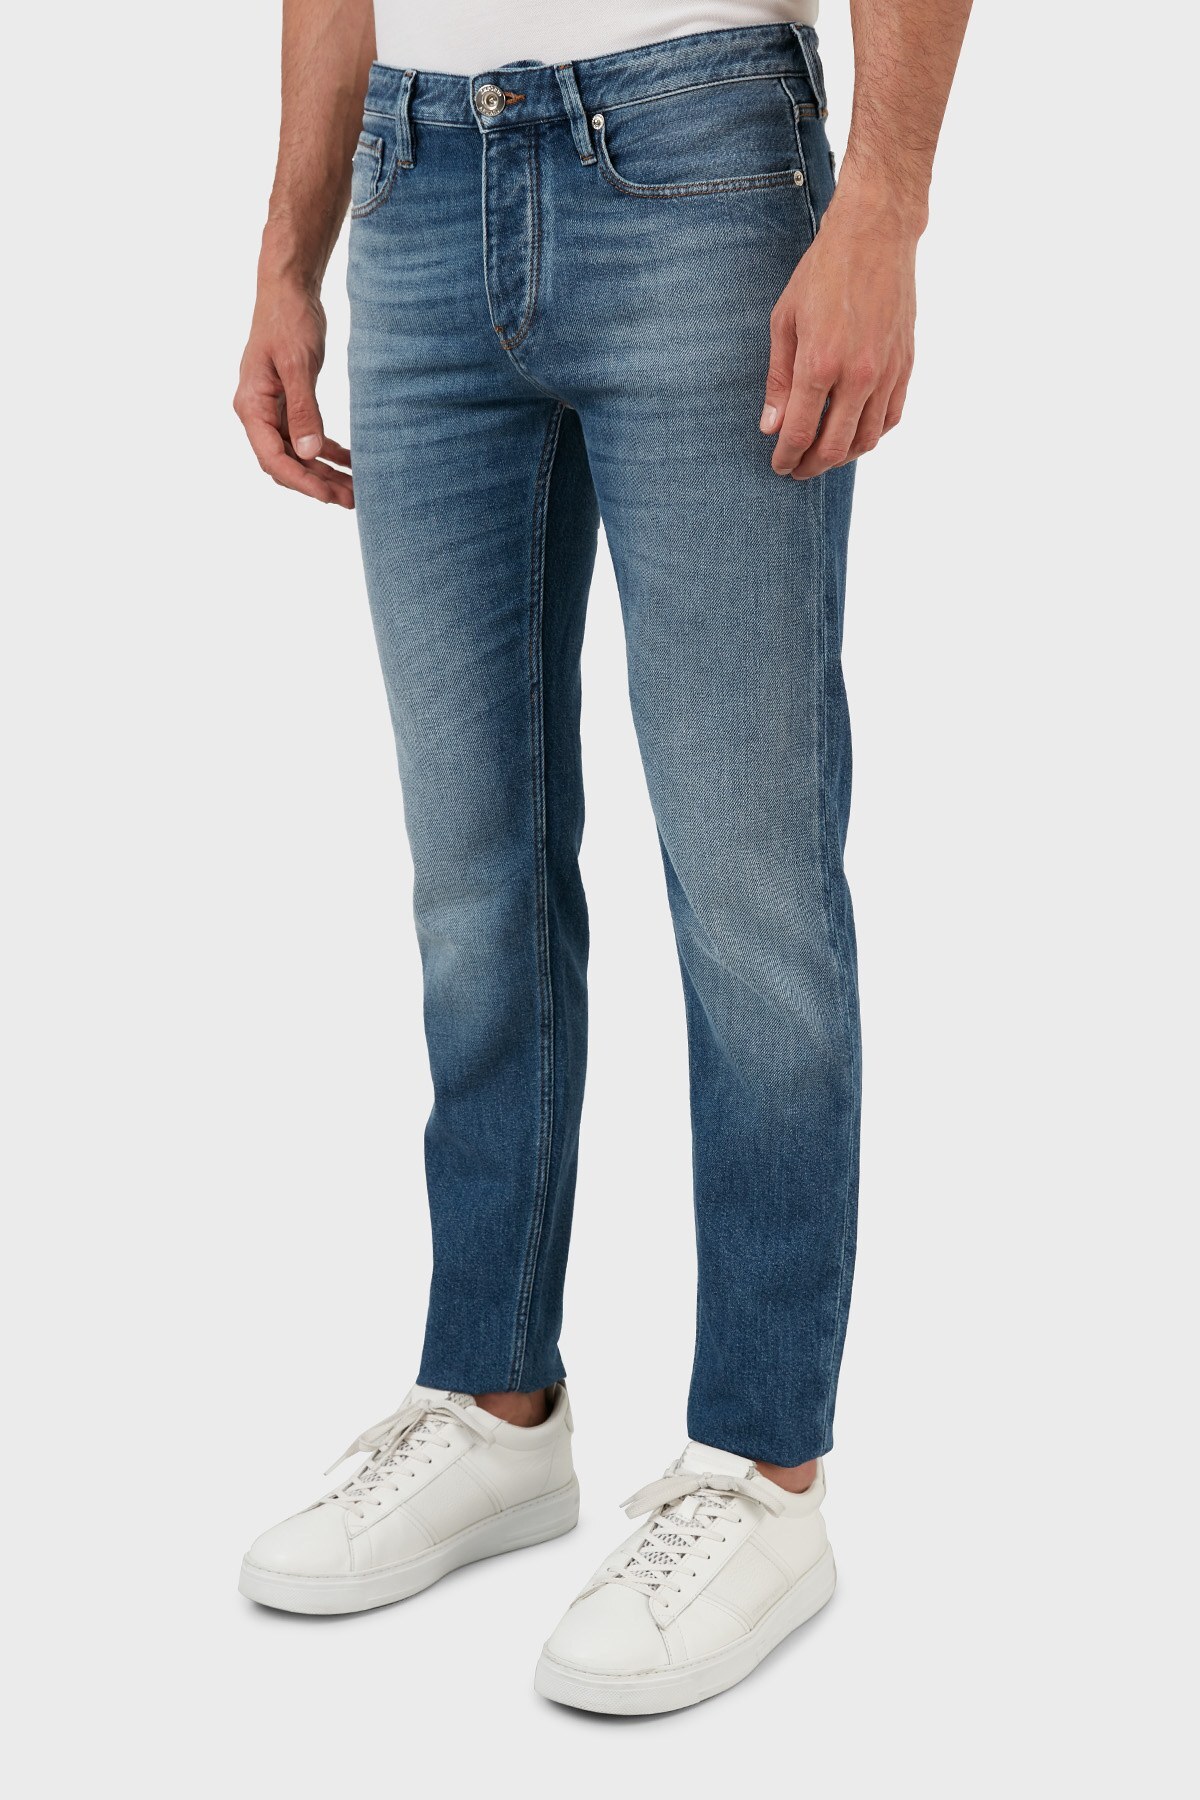 Emporio Armani Pamuklu Cepli Slim Fit Jeans Erkek Kot Pantolon 3L1J75 1DL1Z 0942 MAVİ